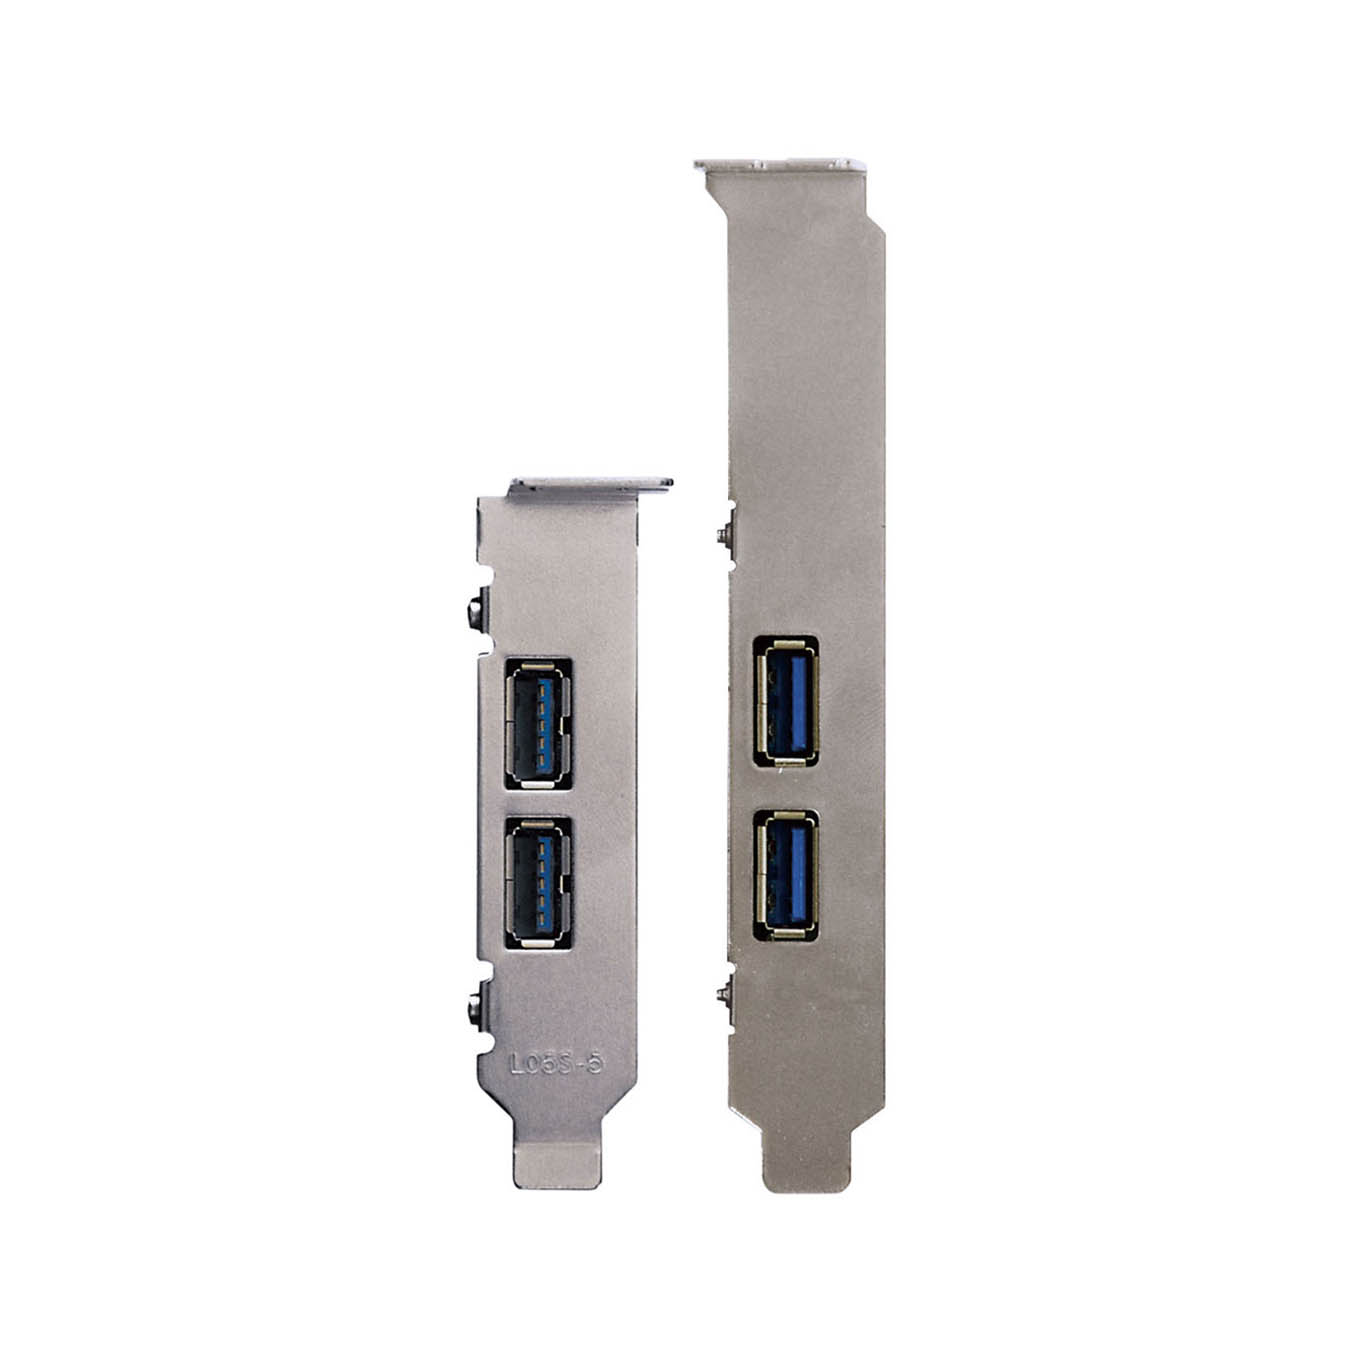 USB3.0-PCIE-P2 | USB3.0-PCIE-P2 | 玄人志向 Renesas社製 μPD720202 